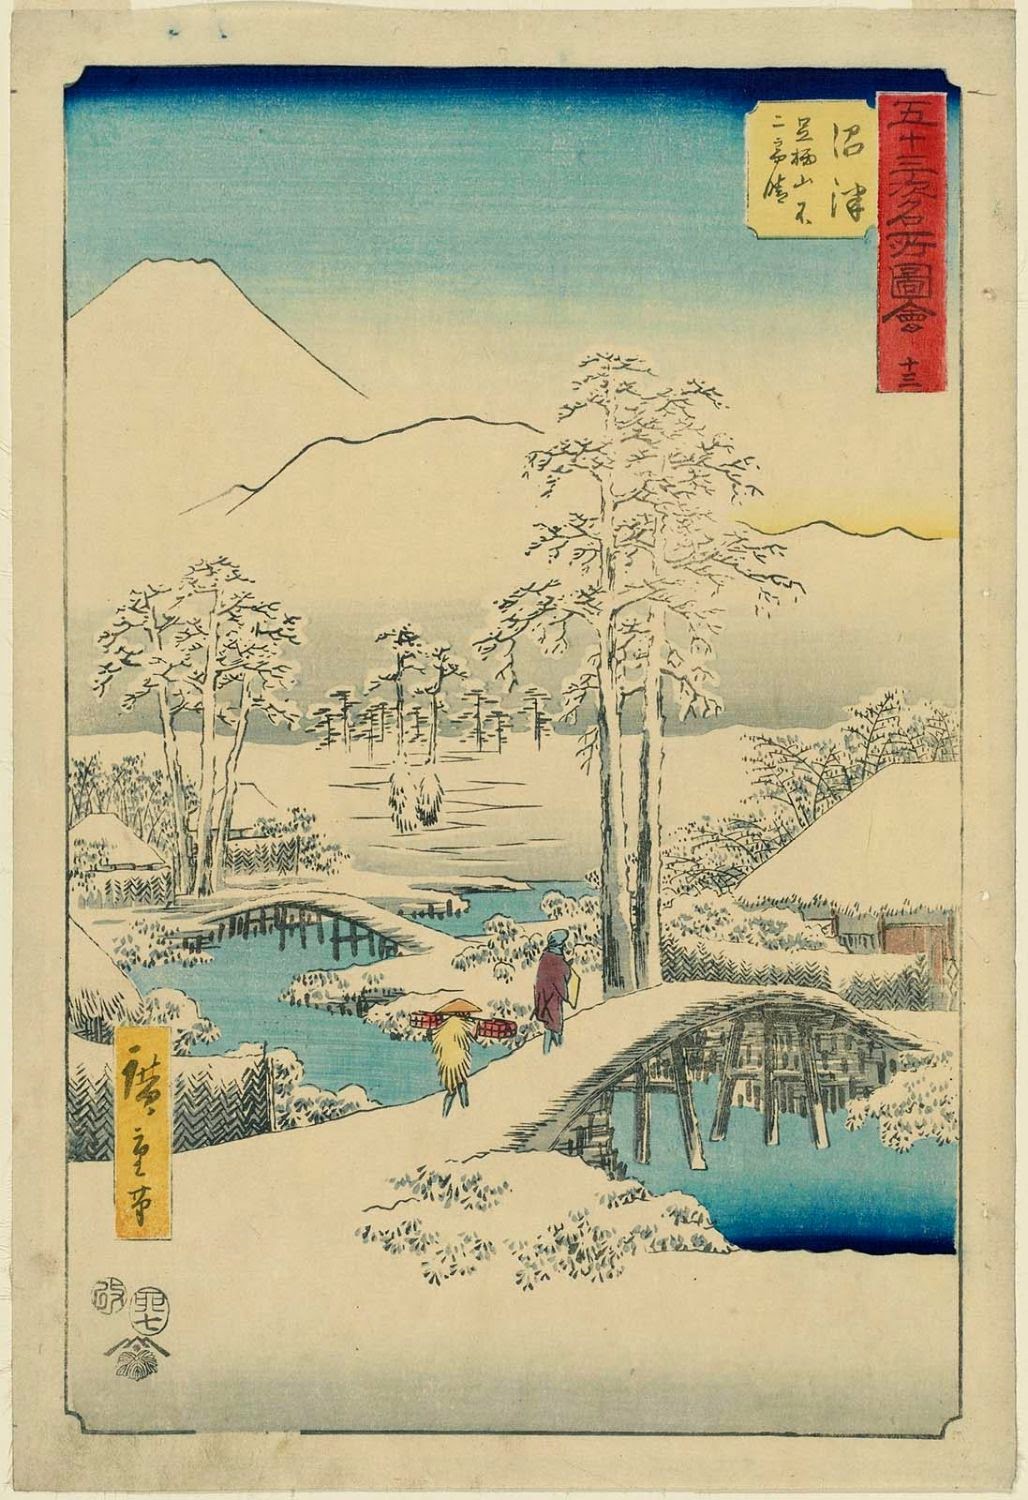 Utagawa Hiroshige, Numazu: Fuji in Clear Weather after Snow, from the Ashigara Mountains